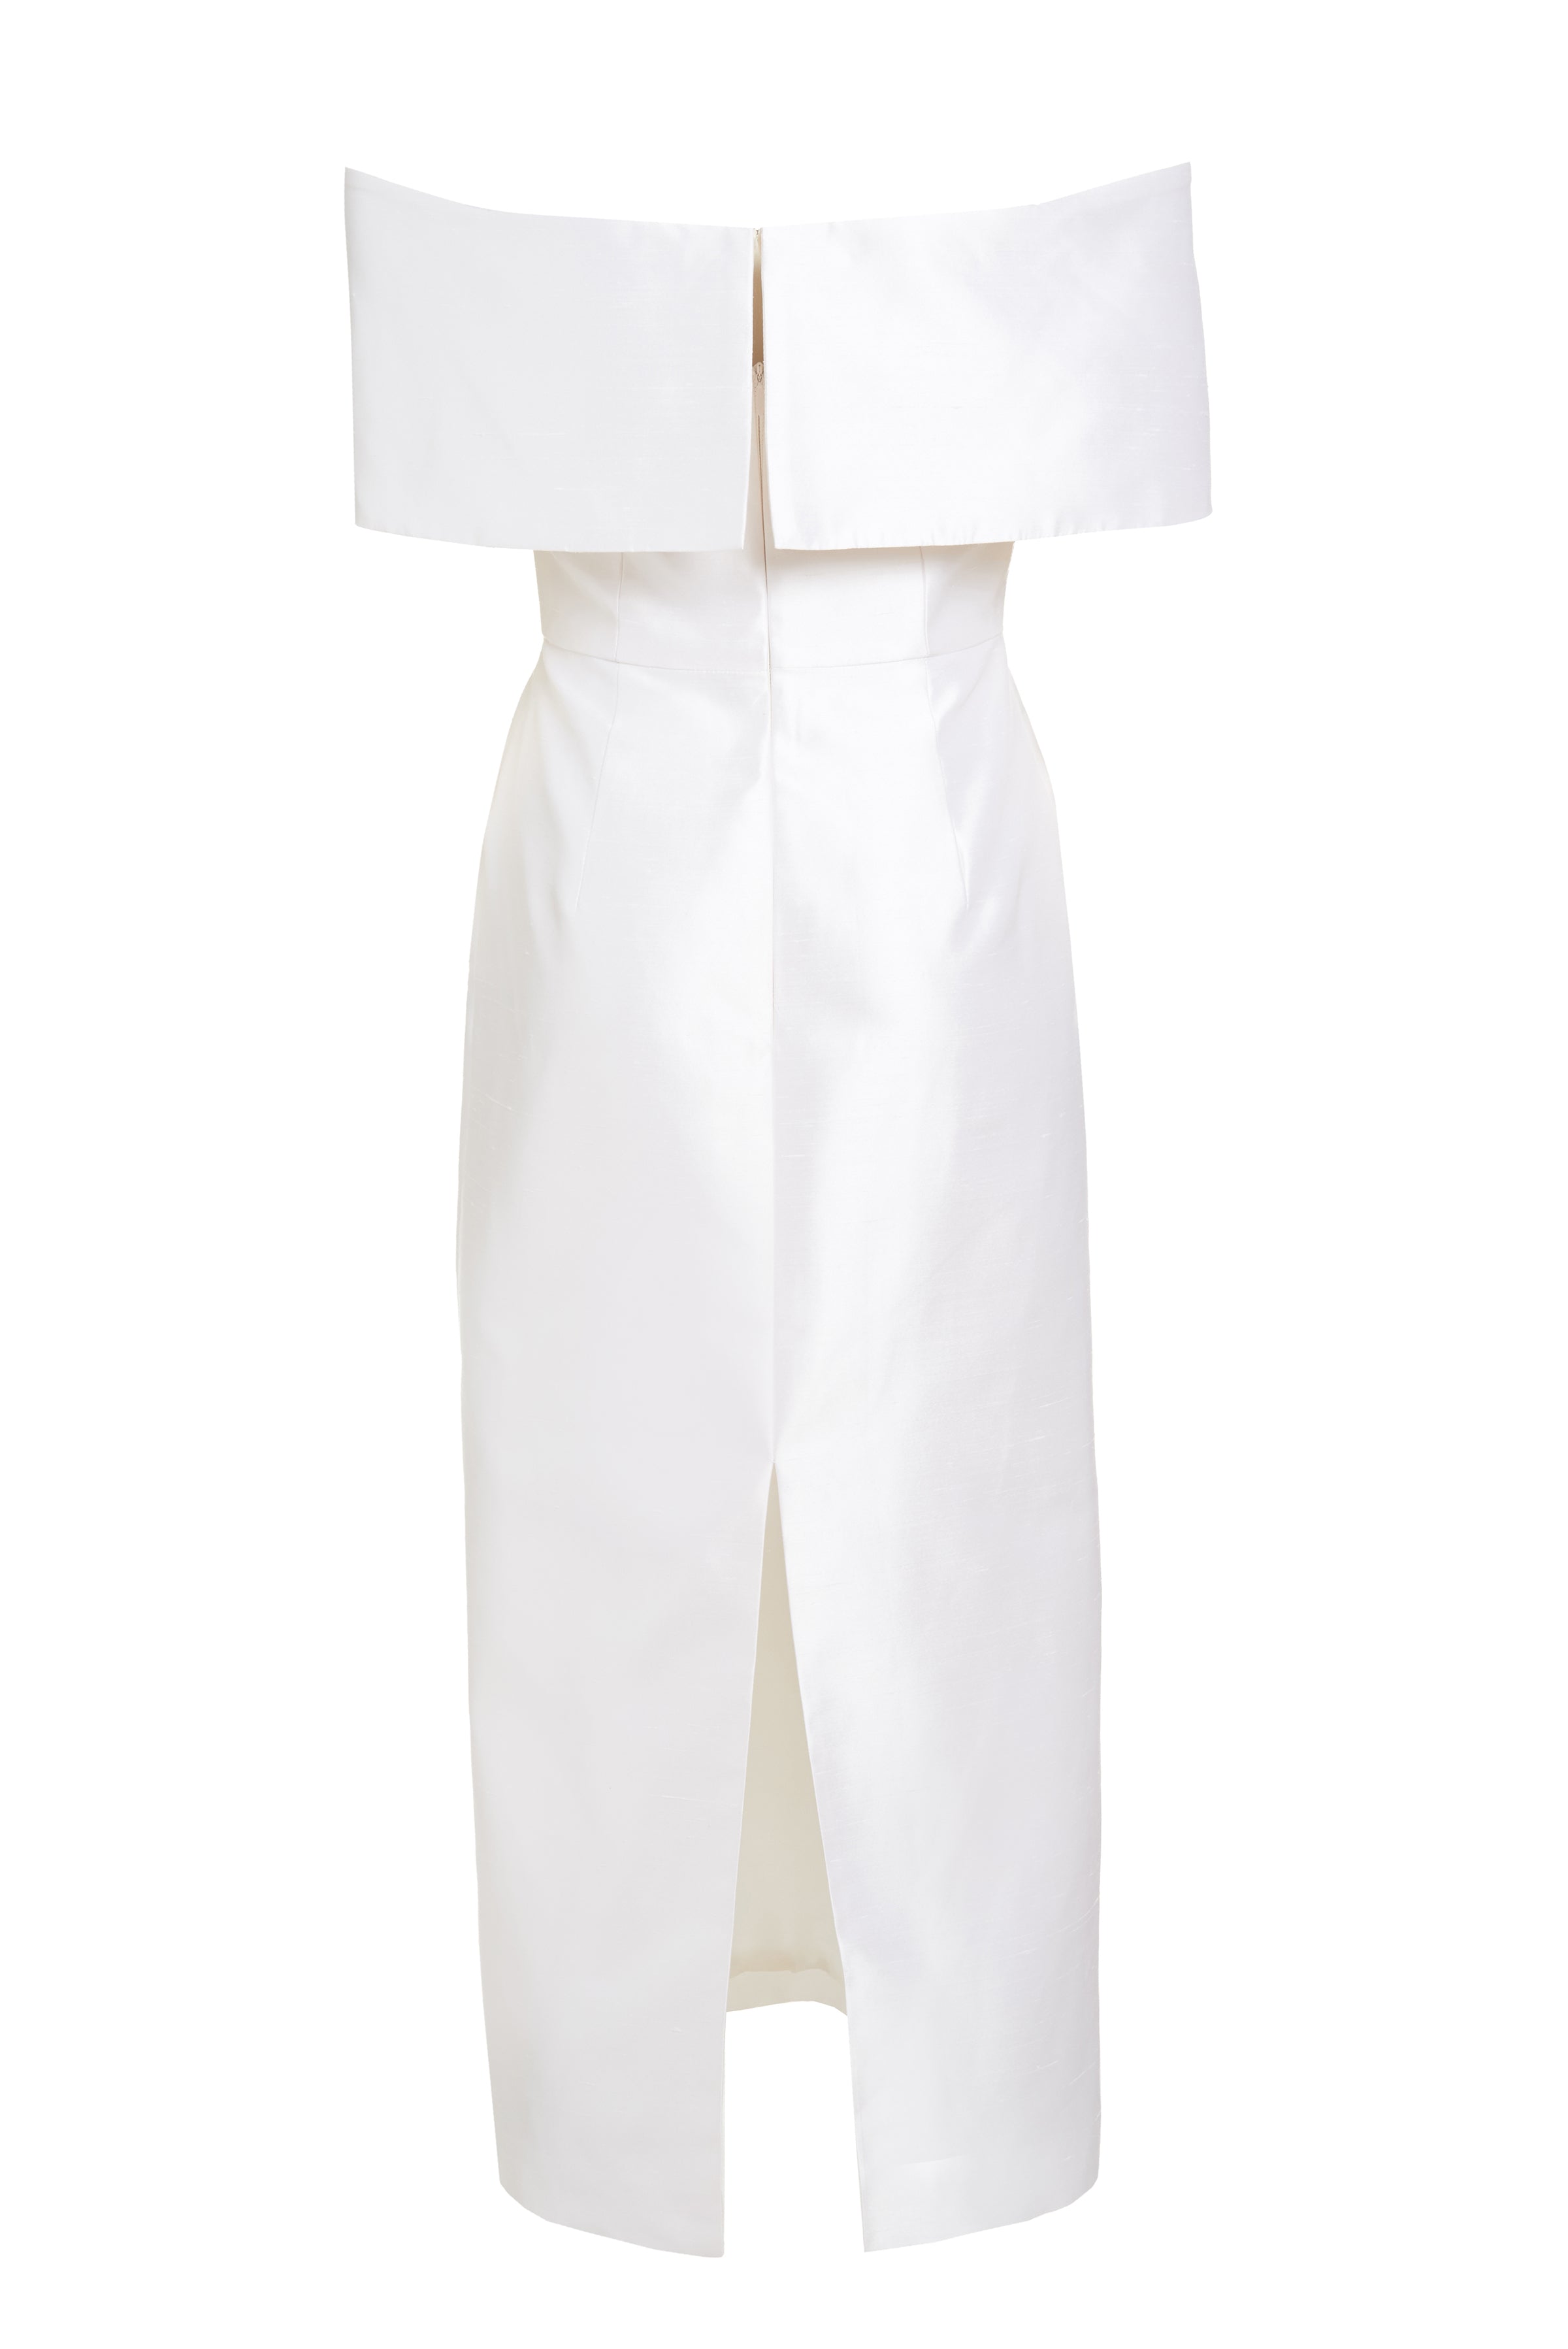 Eveline Off-the-Shoulder White Satin Dupioni Dress